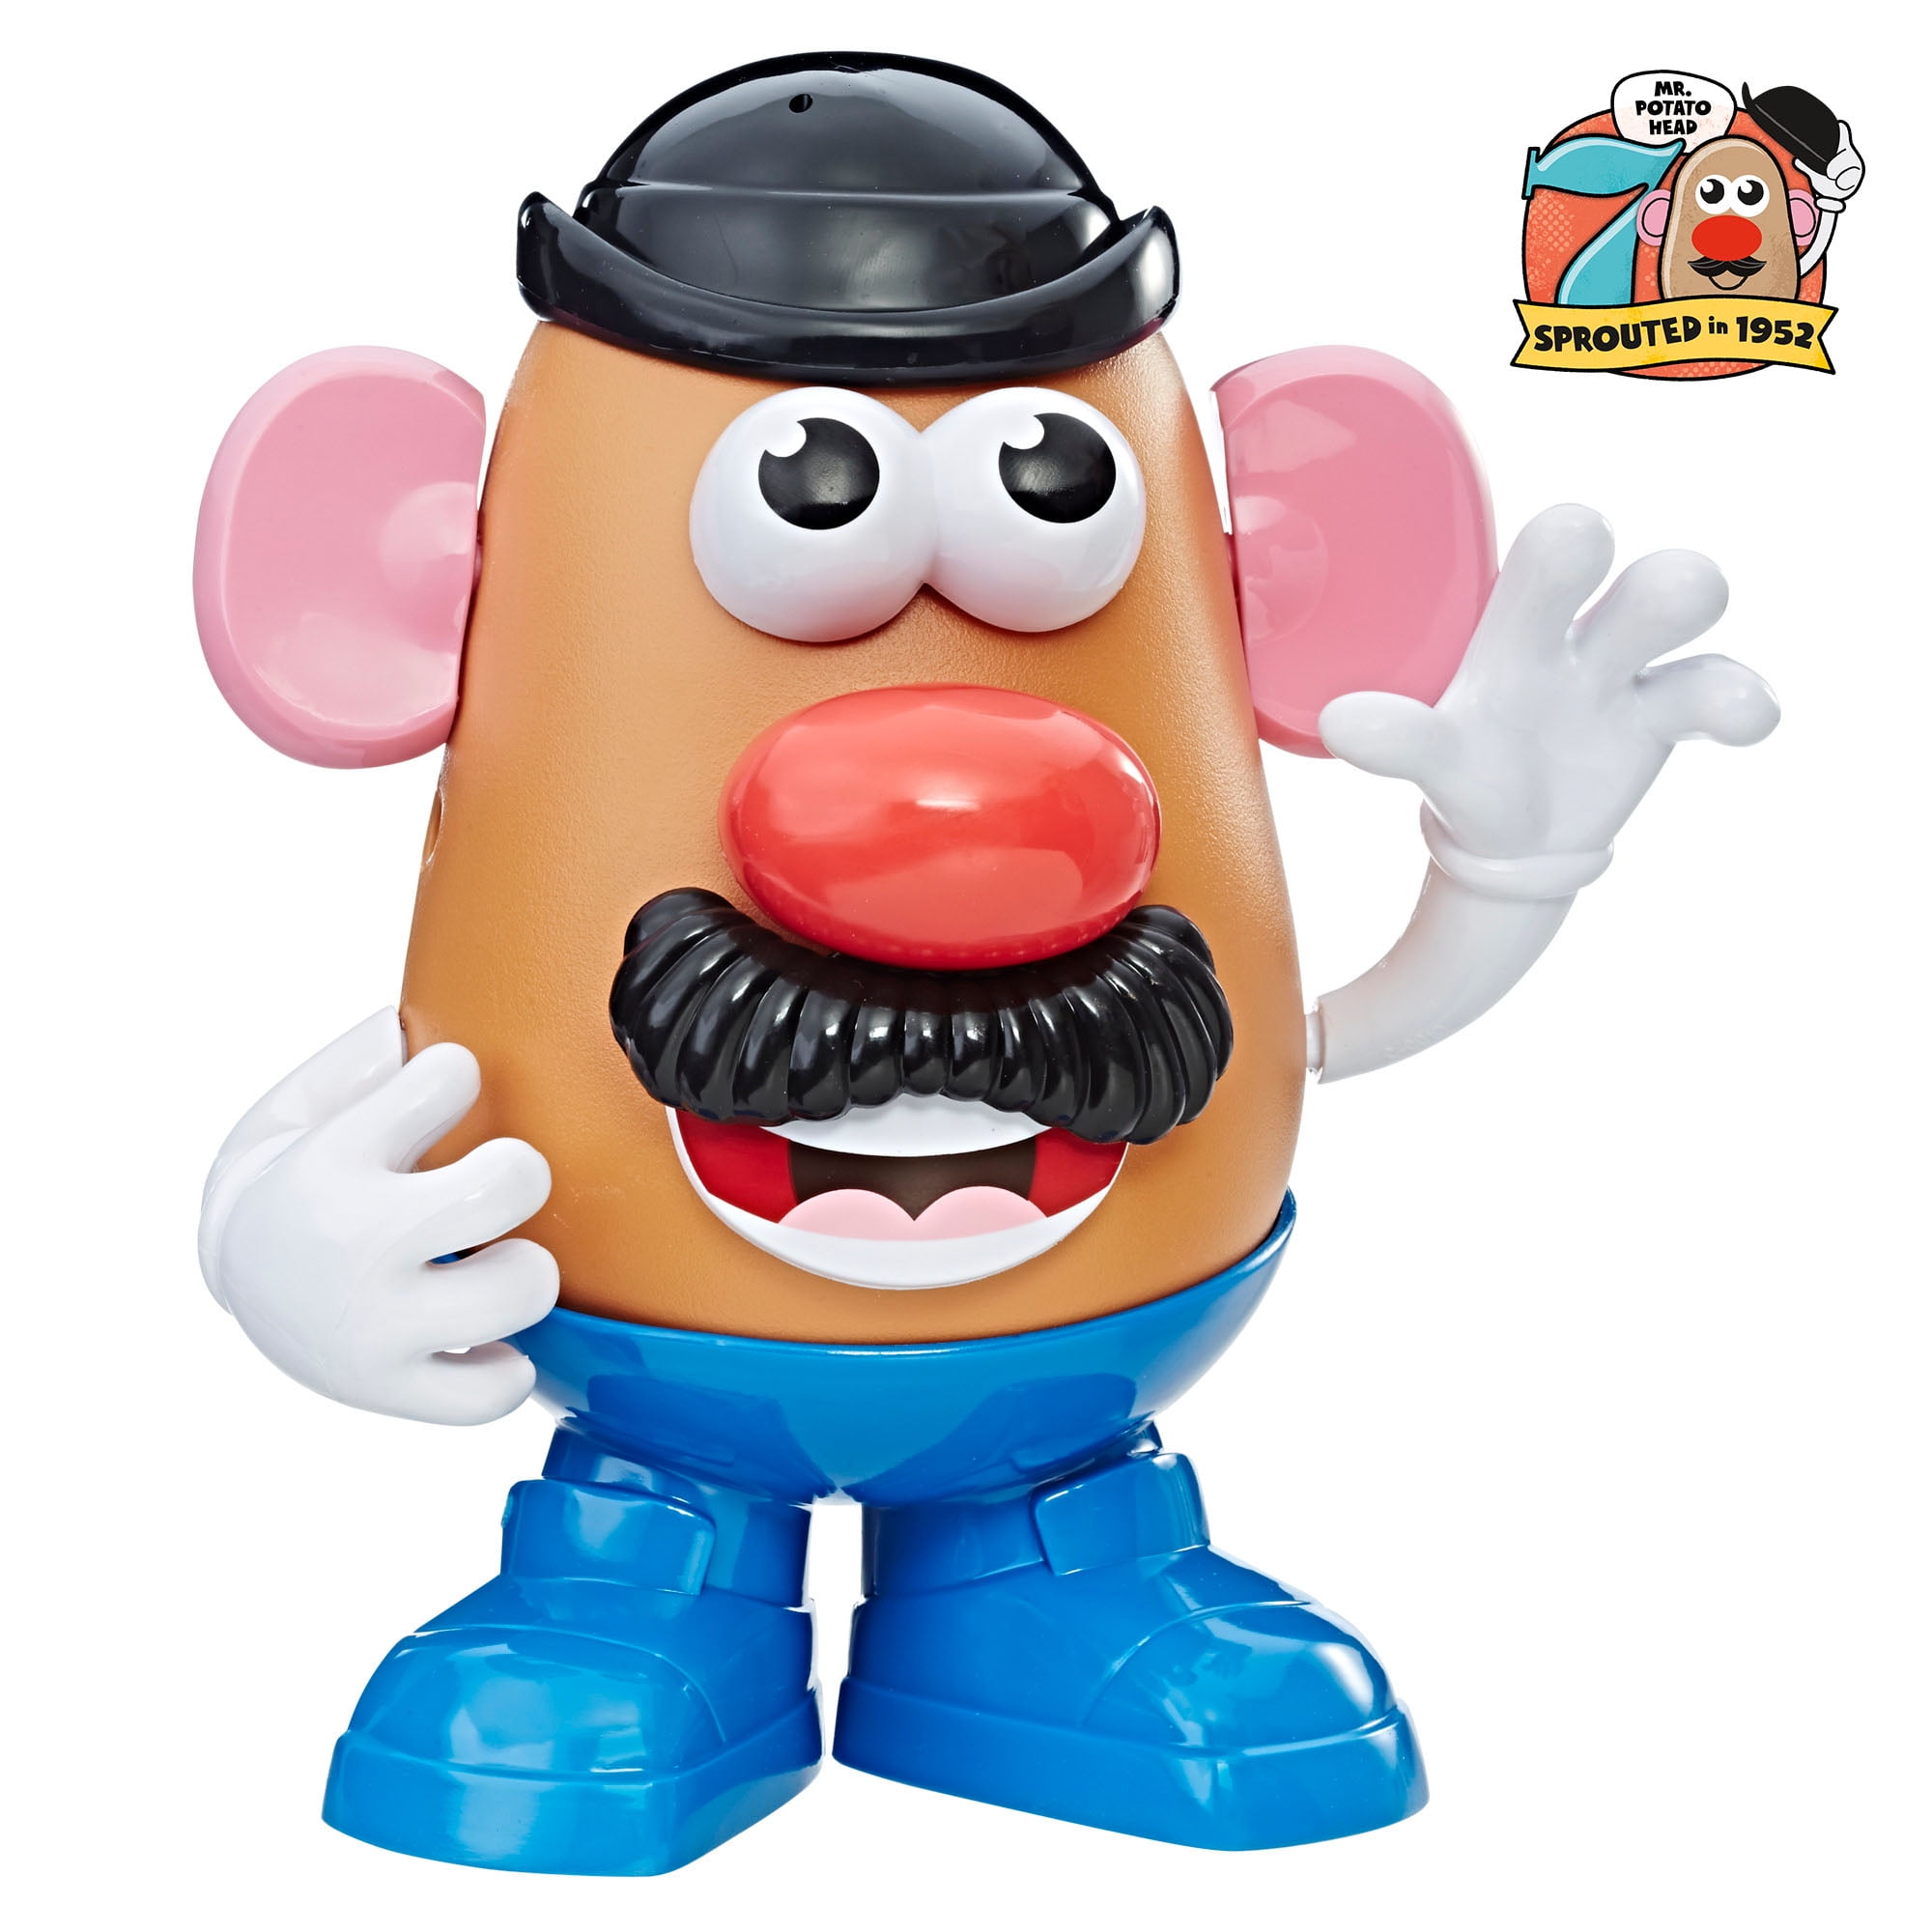 Potato Head Tater Tub Set for sale online Playskool Mr 